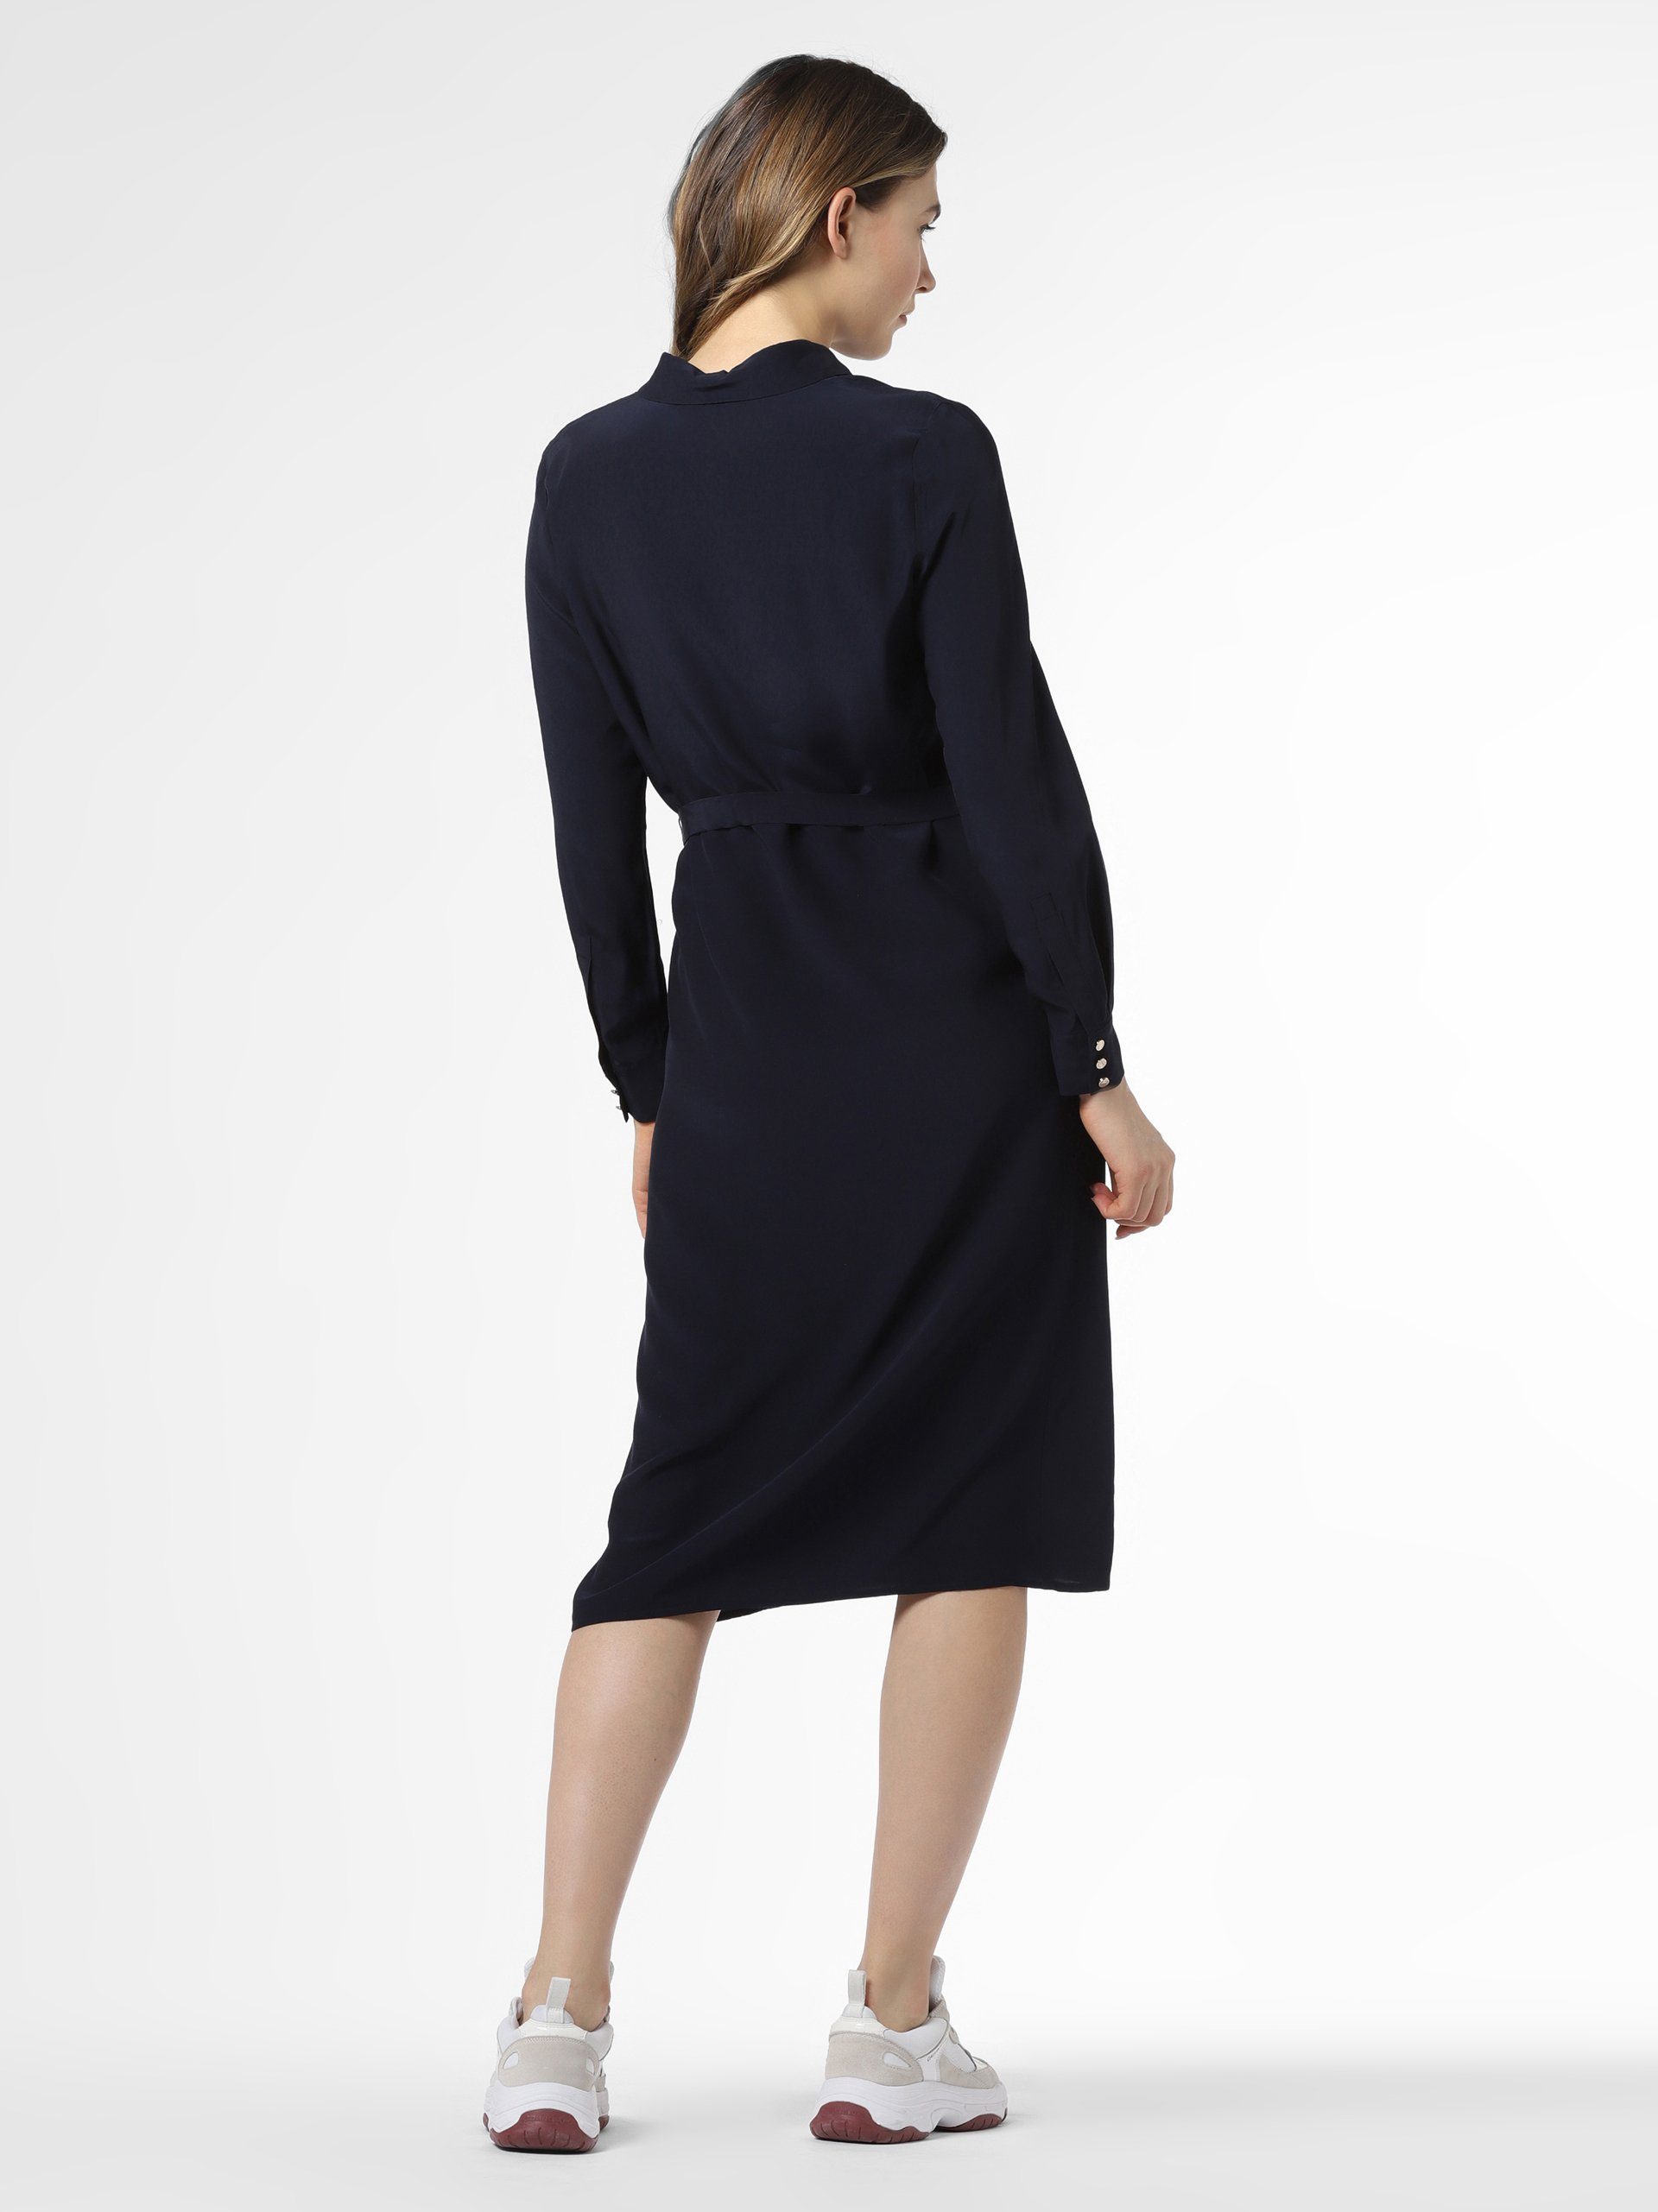 Esprit Collection E400 A-Linien-Kleid NAVY